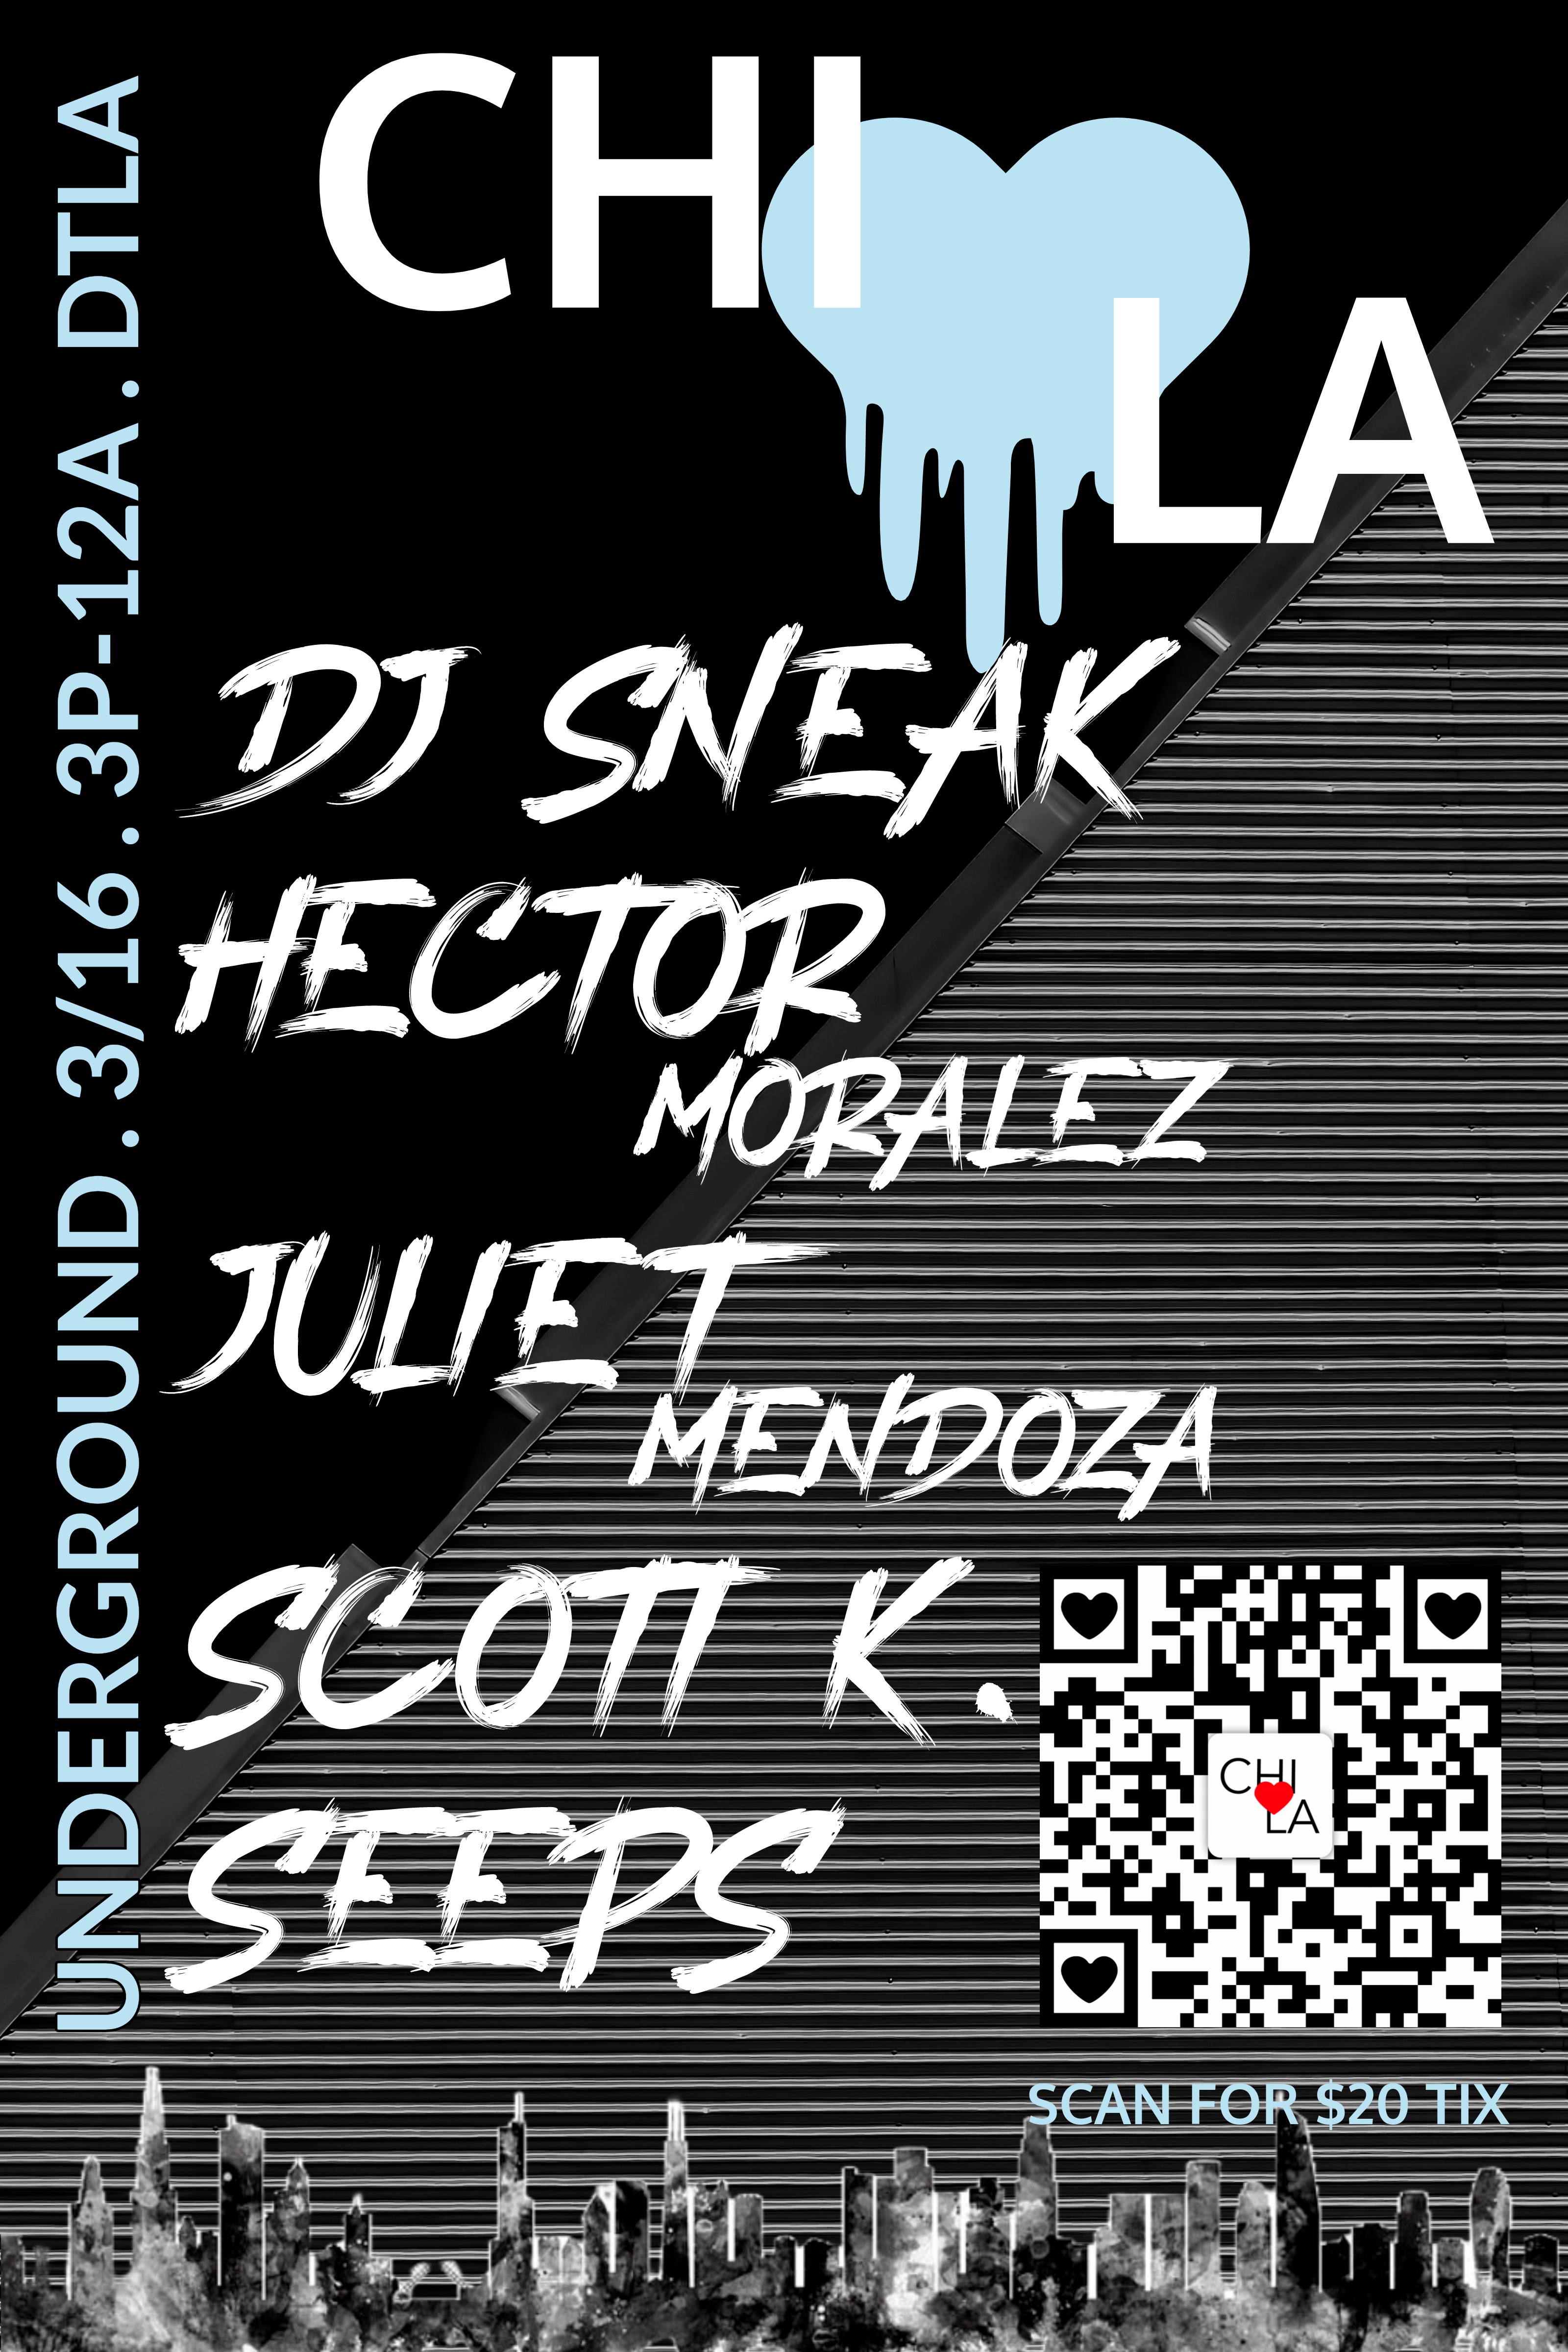 CHI♡LA - $20 TIX - stacked lineup: DJ SNEAK, HECTOR MORALEZ, JULIET MENDOZA, SCOTT K., SEEPS - Página frontal